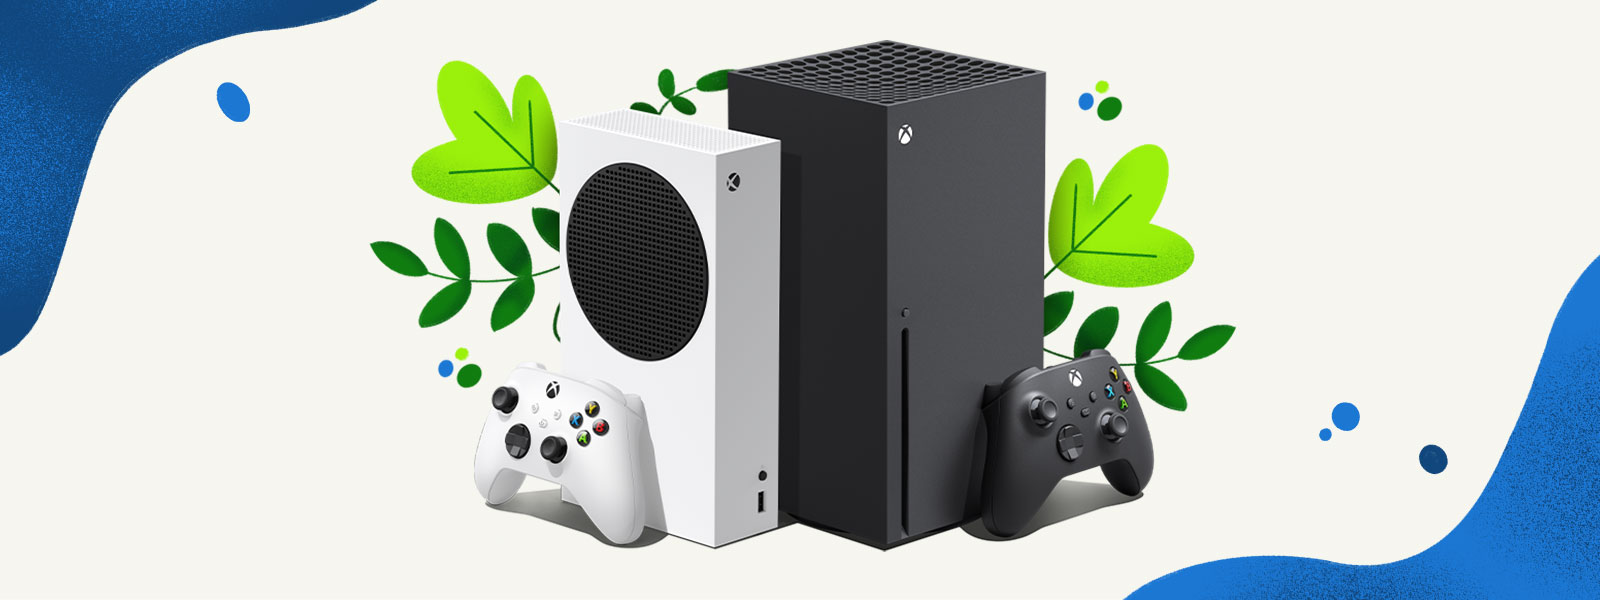 Xbox Series X と Xbox Series S のコンソールが植物と青い水しぶきの装飾的な背景の前に並べられている。